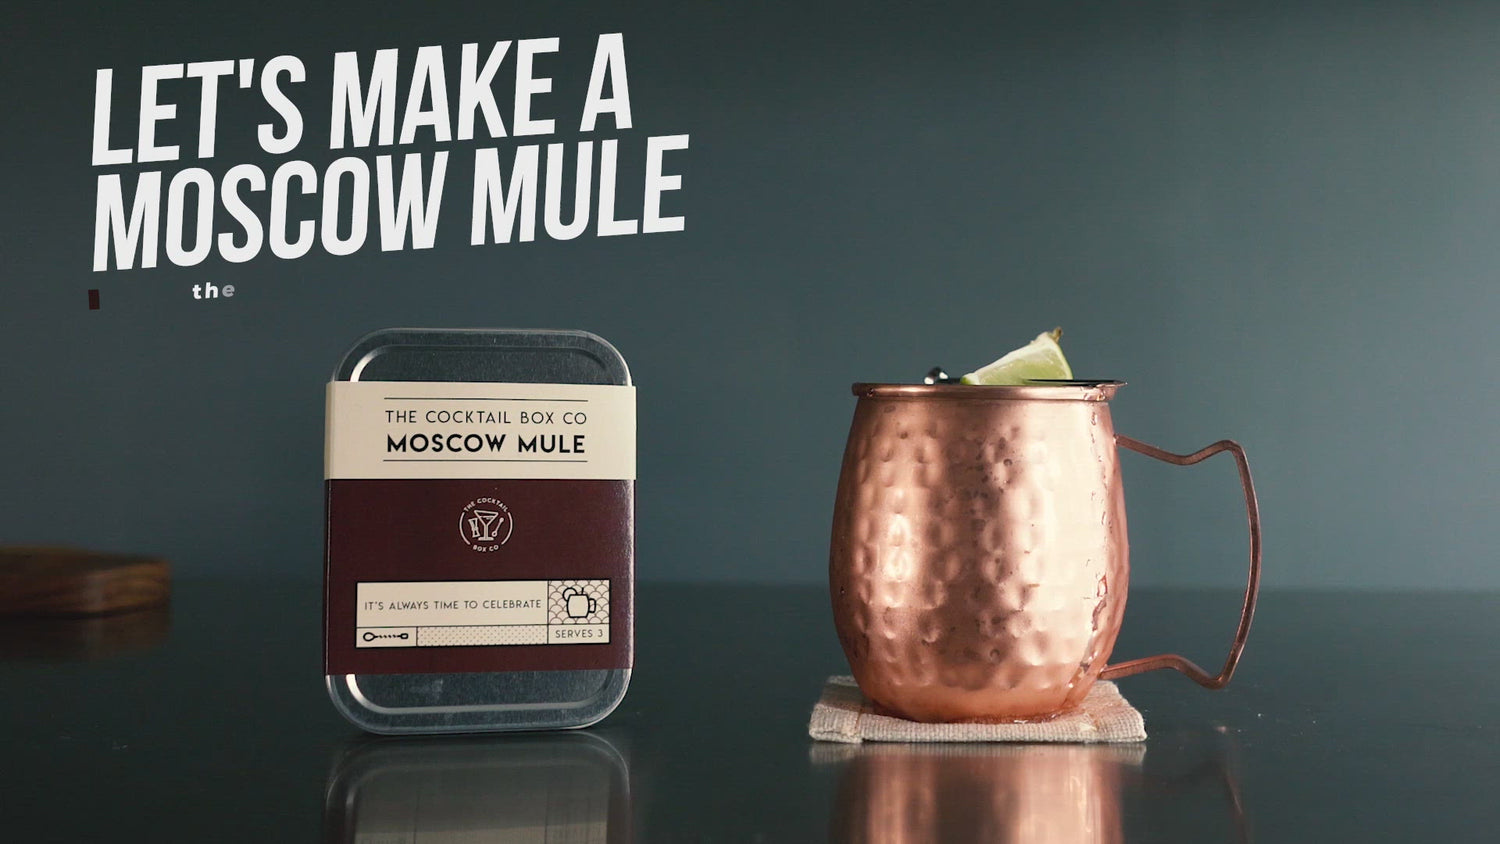 Kit cocktail OSCO mule